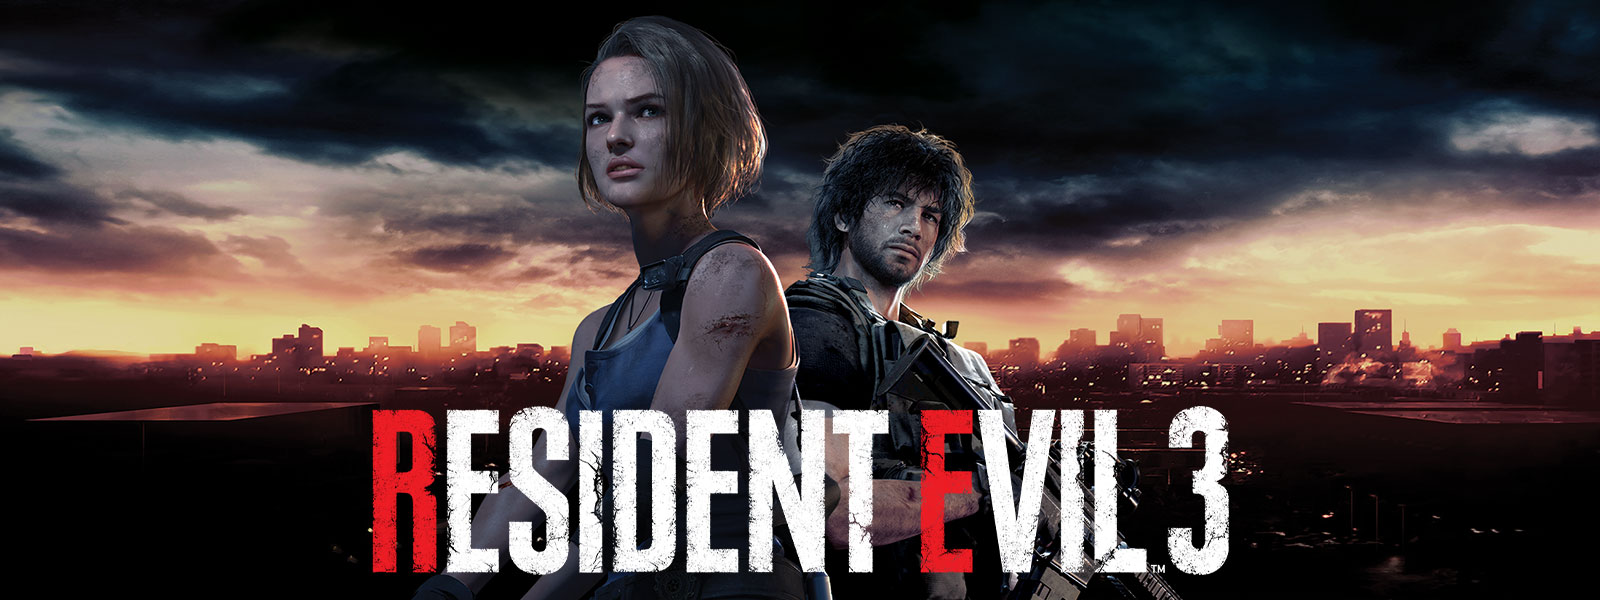 Resident Evil 3, Jill Valentine og Carlos Oliveira står med skylinen fra Raccoon City bag sig